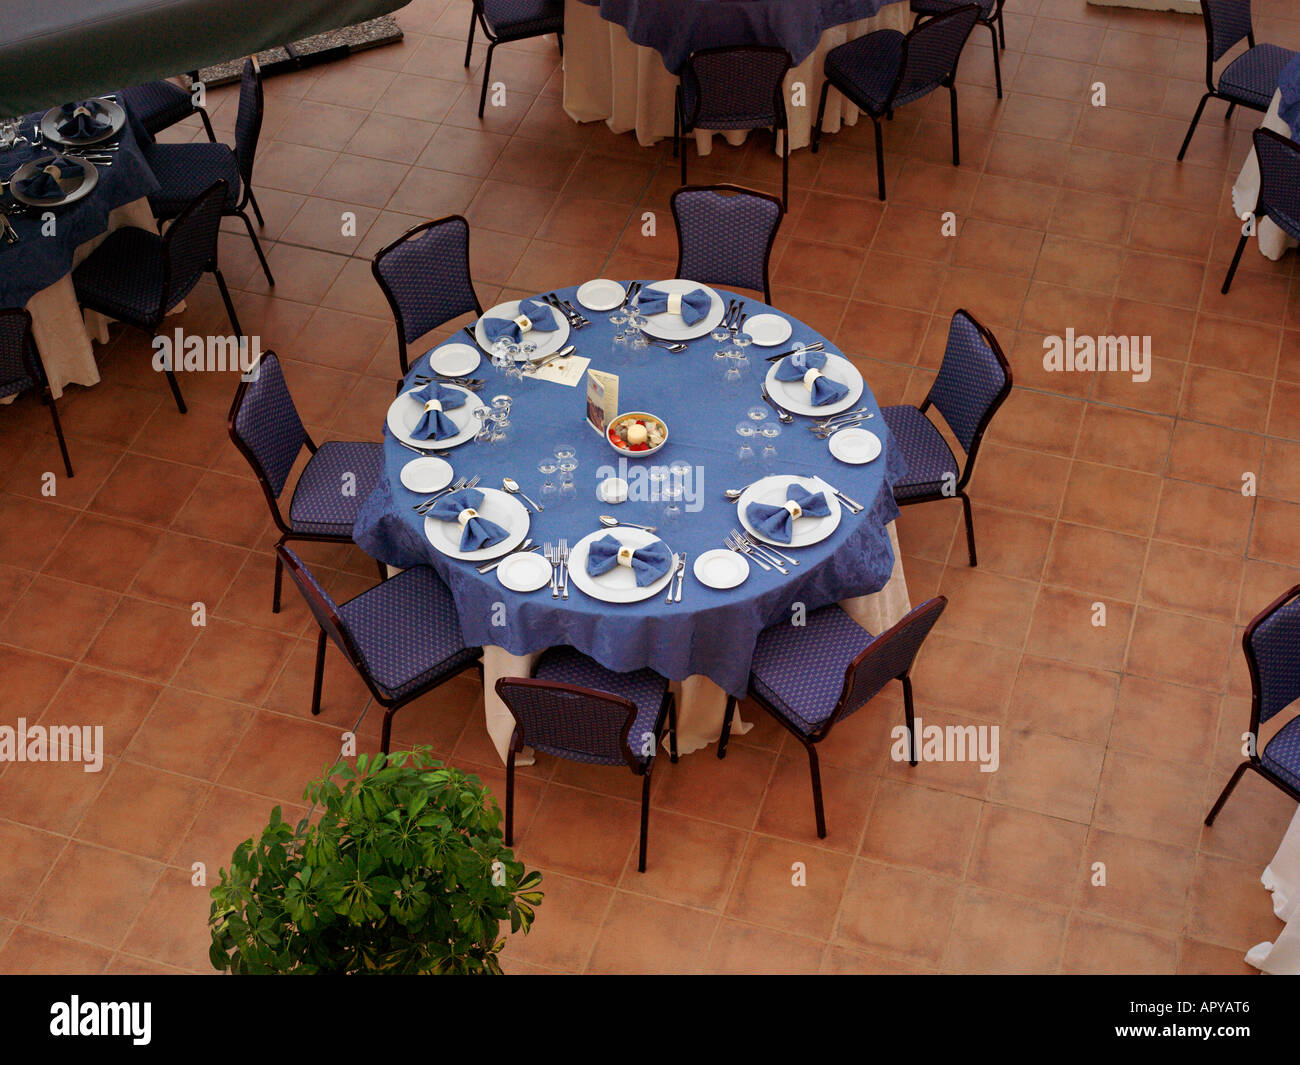 Palermo Sicily Italy Genoardo Park Hotel Table Set for meal Stock Photo